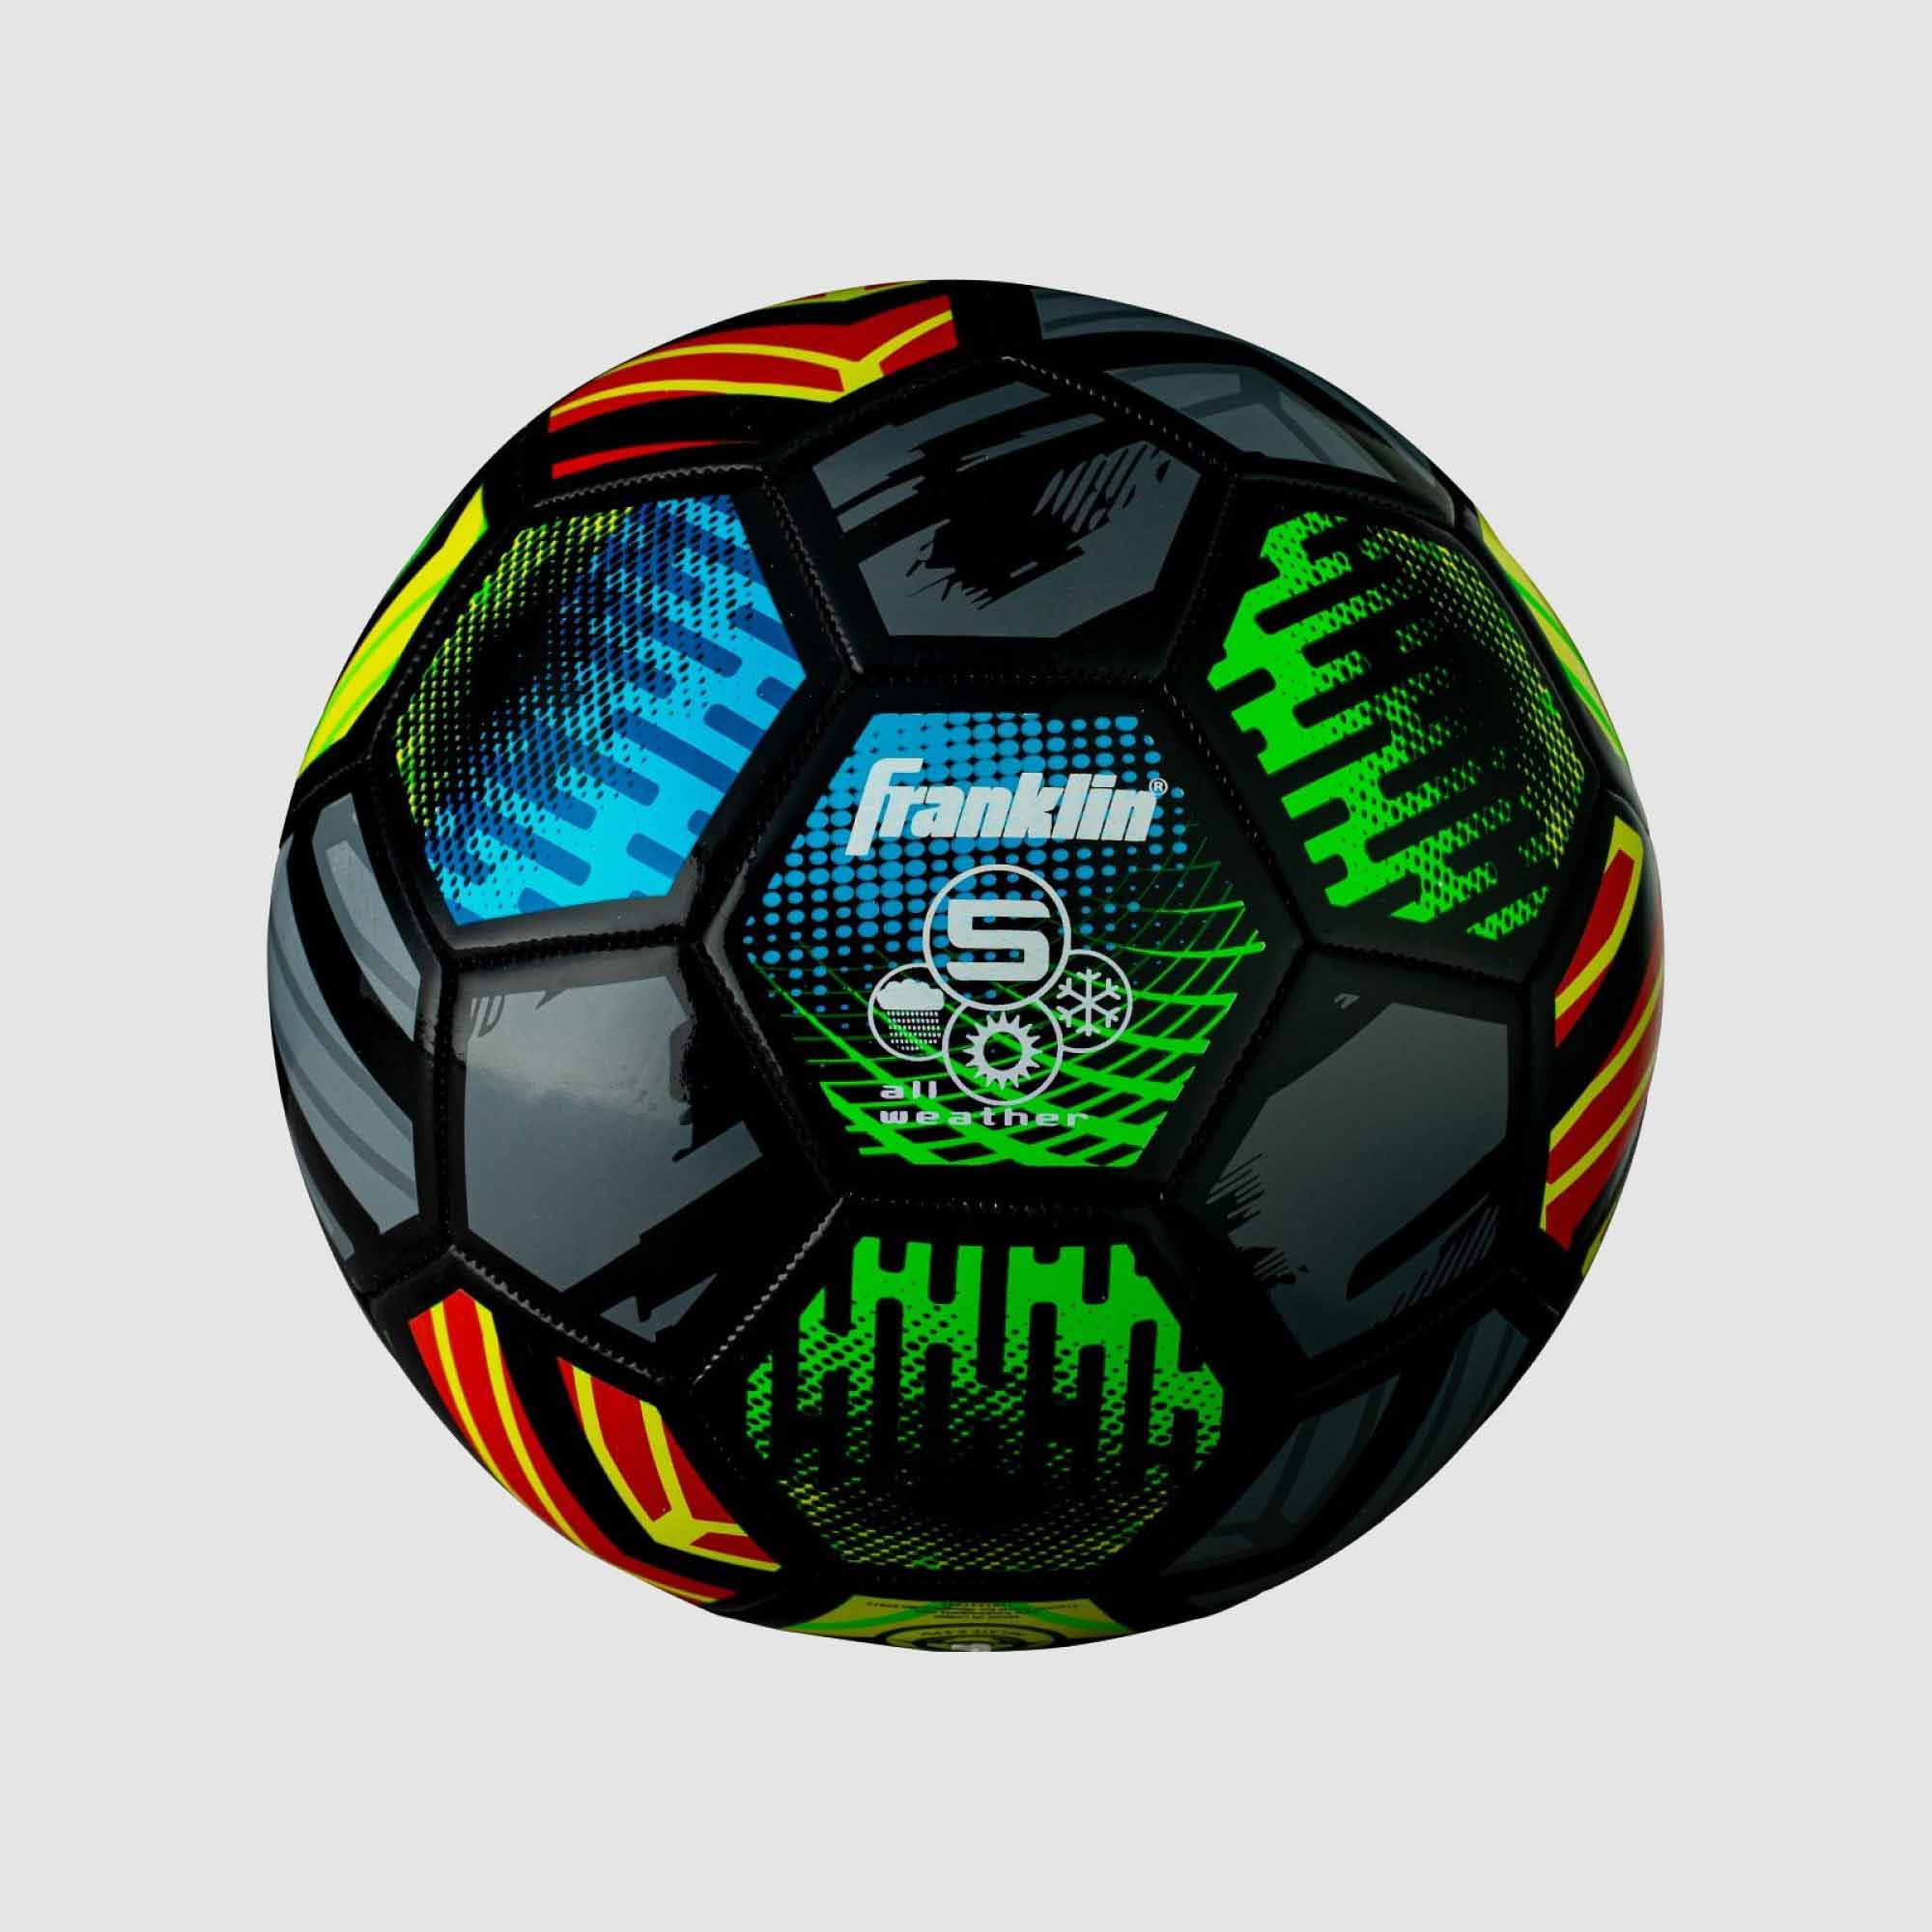 Franklin Mystic Soccer Ball Size 5